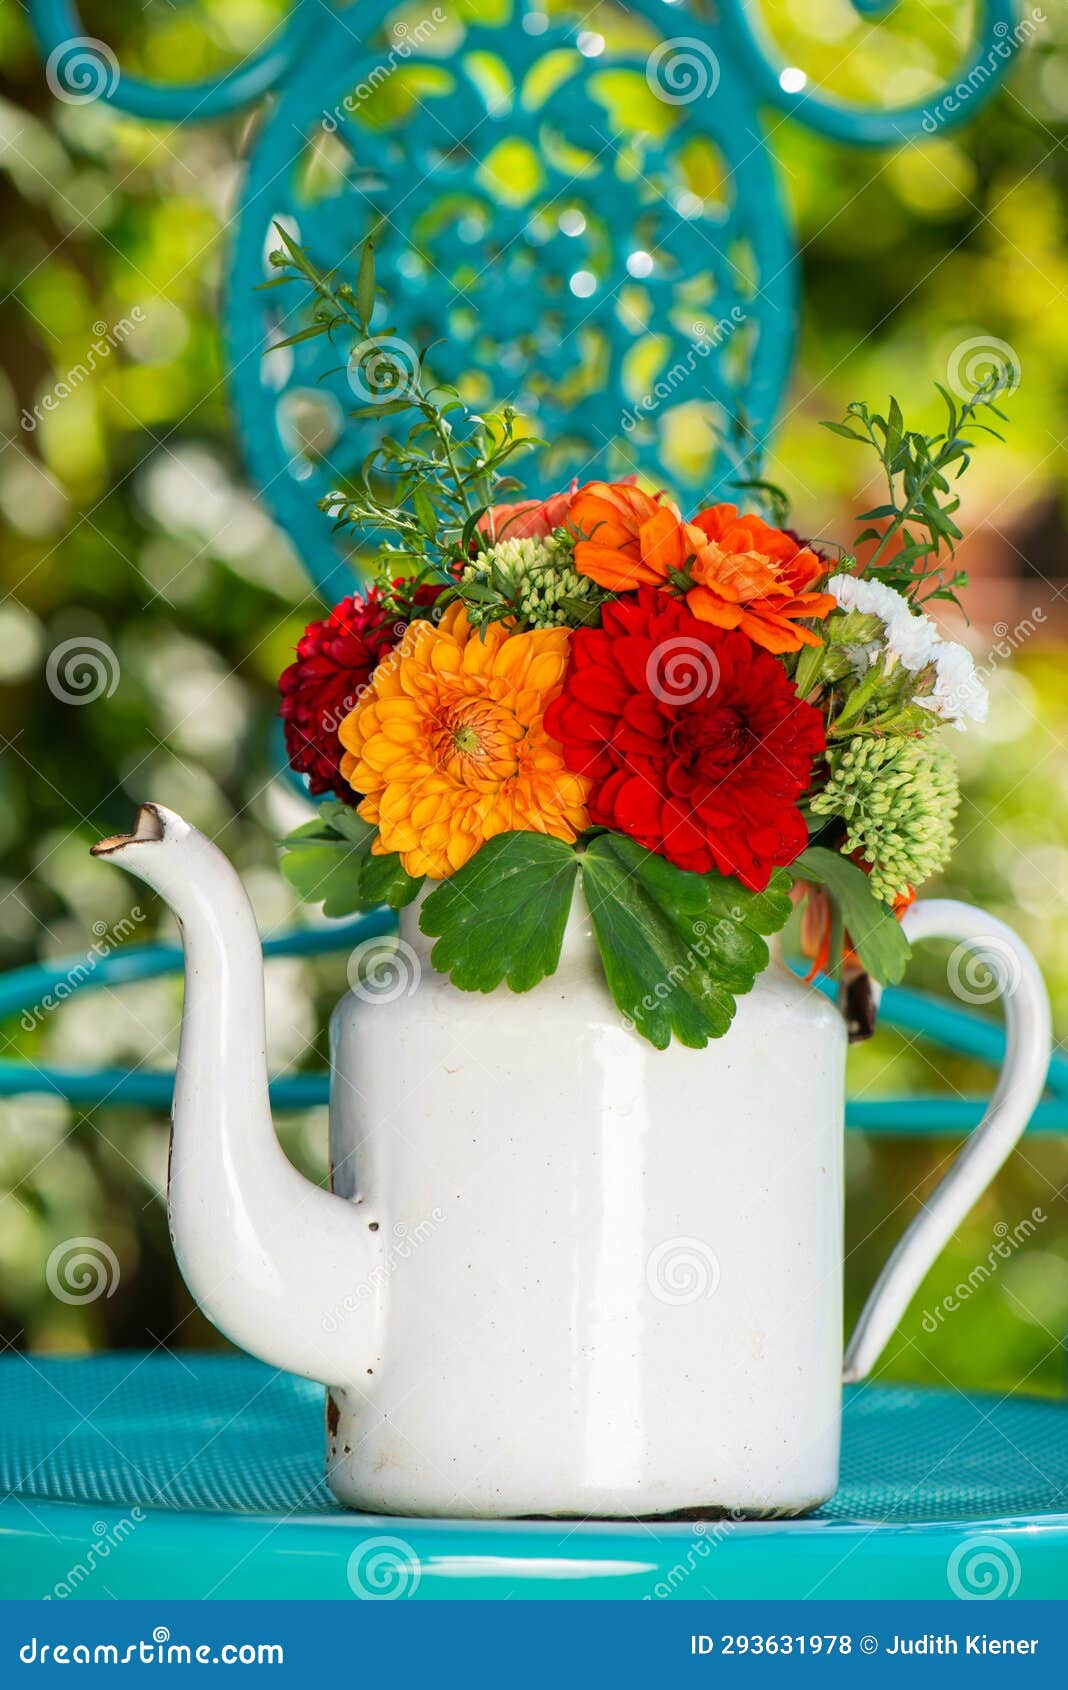 colorful flower bouquet with dalias in a enamel milk jug